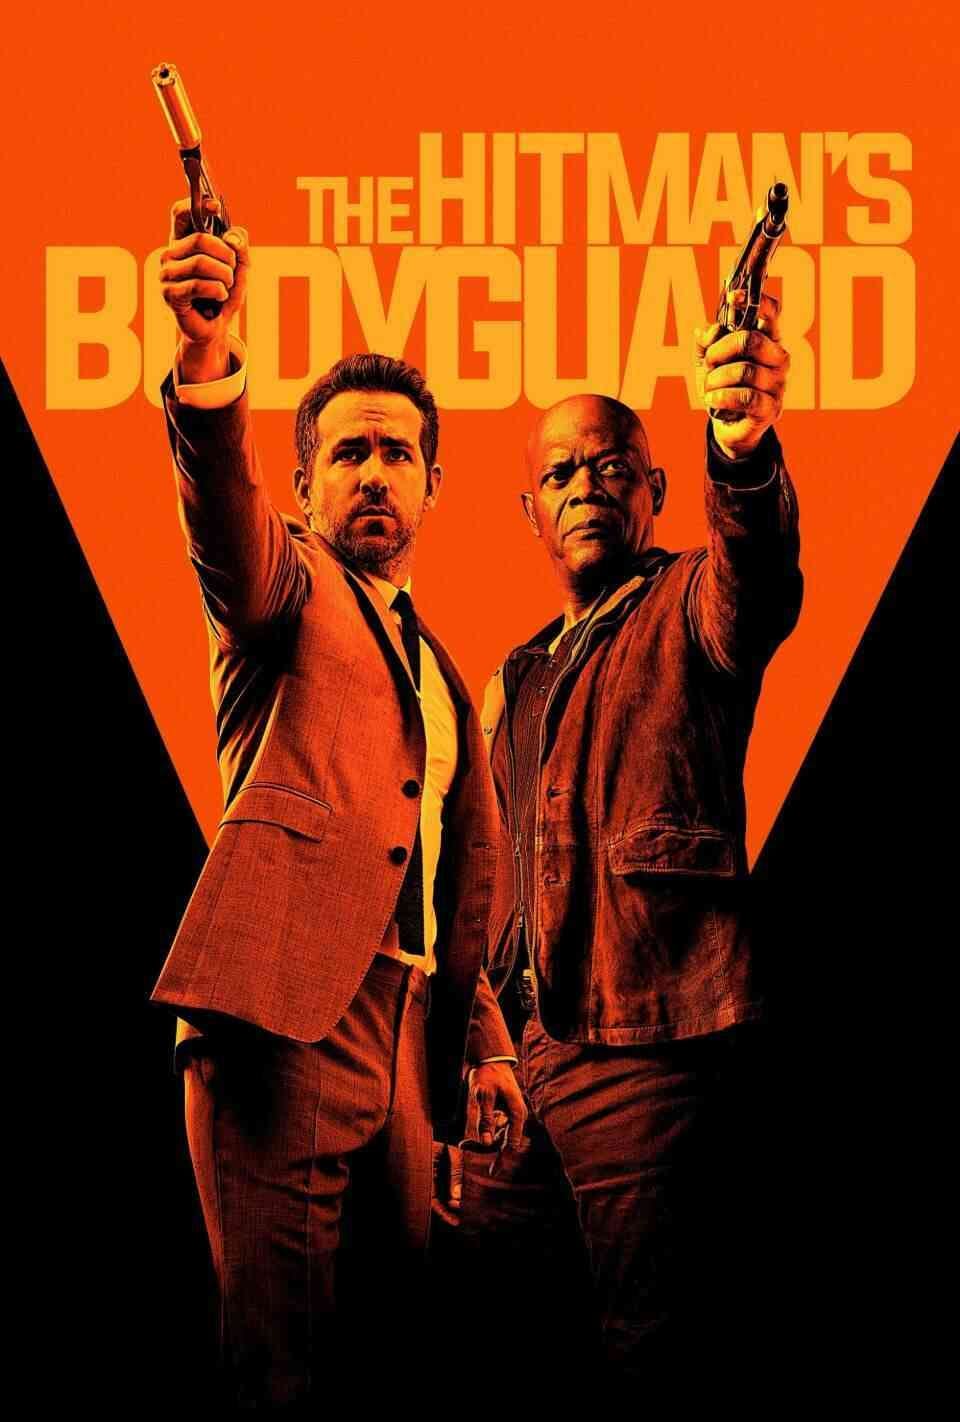 Read The Hitman's Bodyguard screenplay (poster)